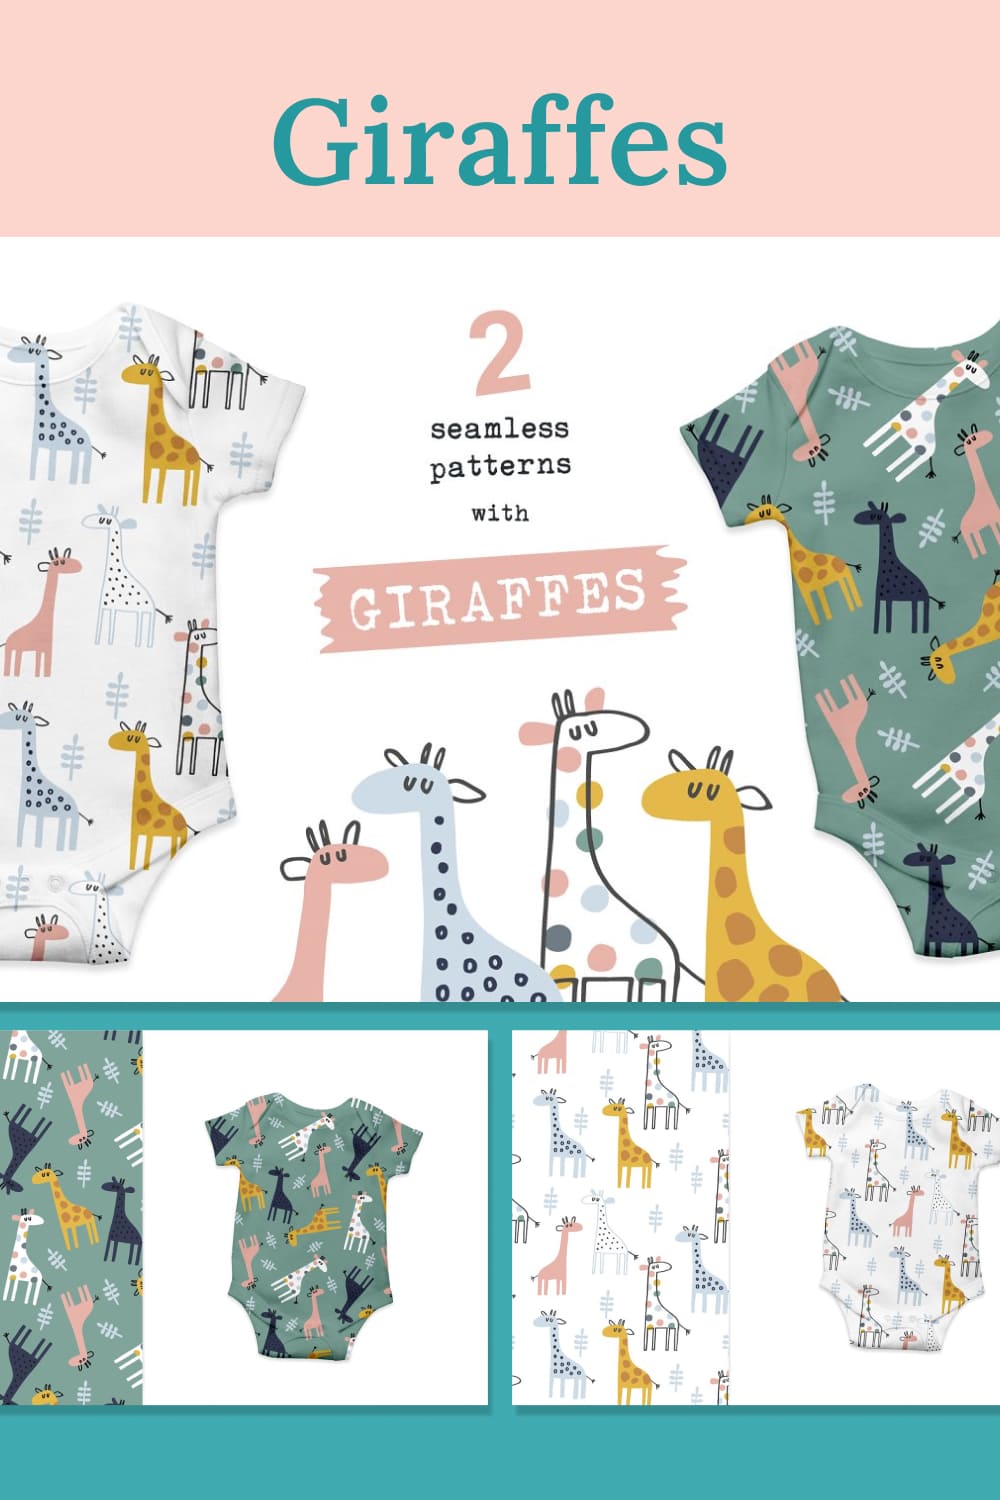 Giraffes Patterns Graphic 04.